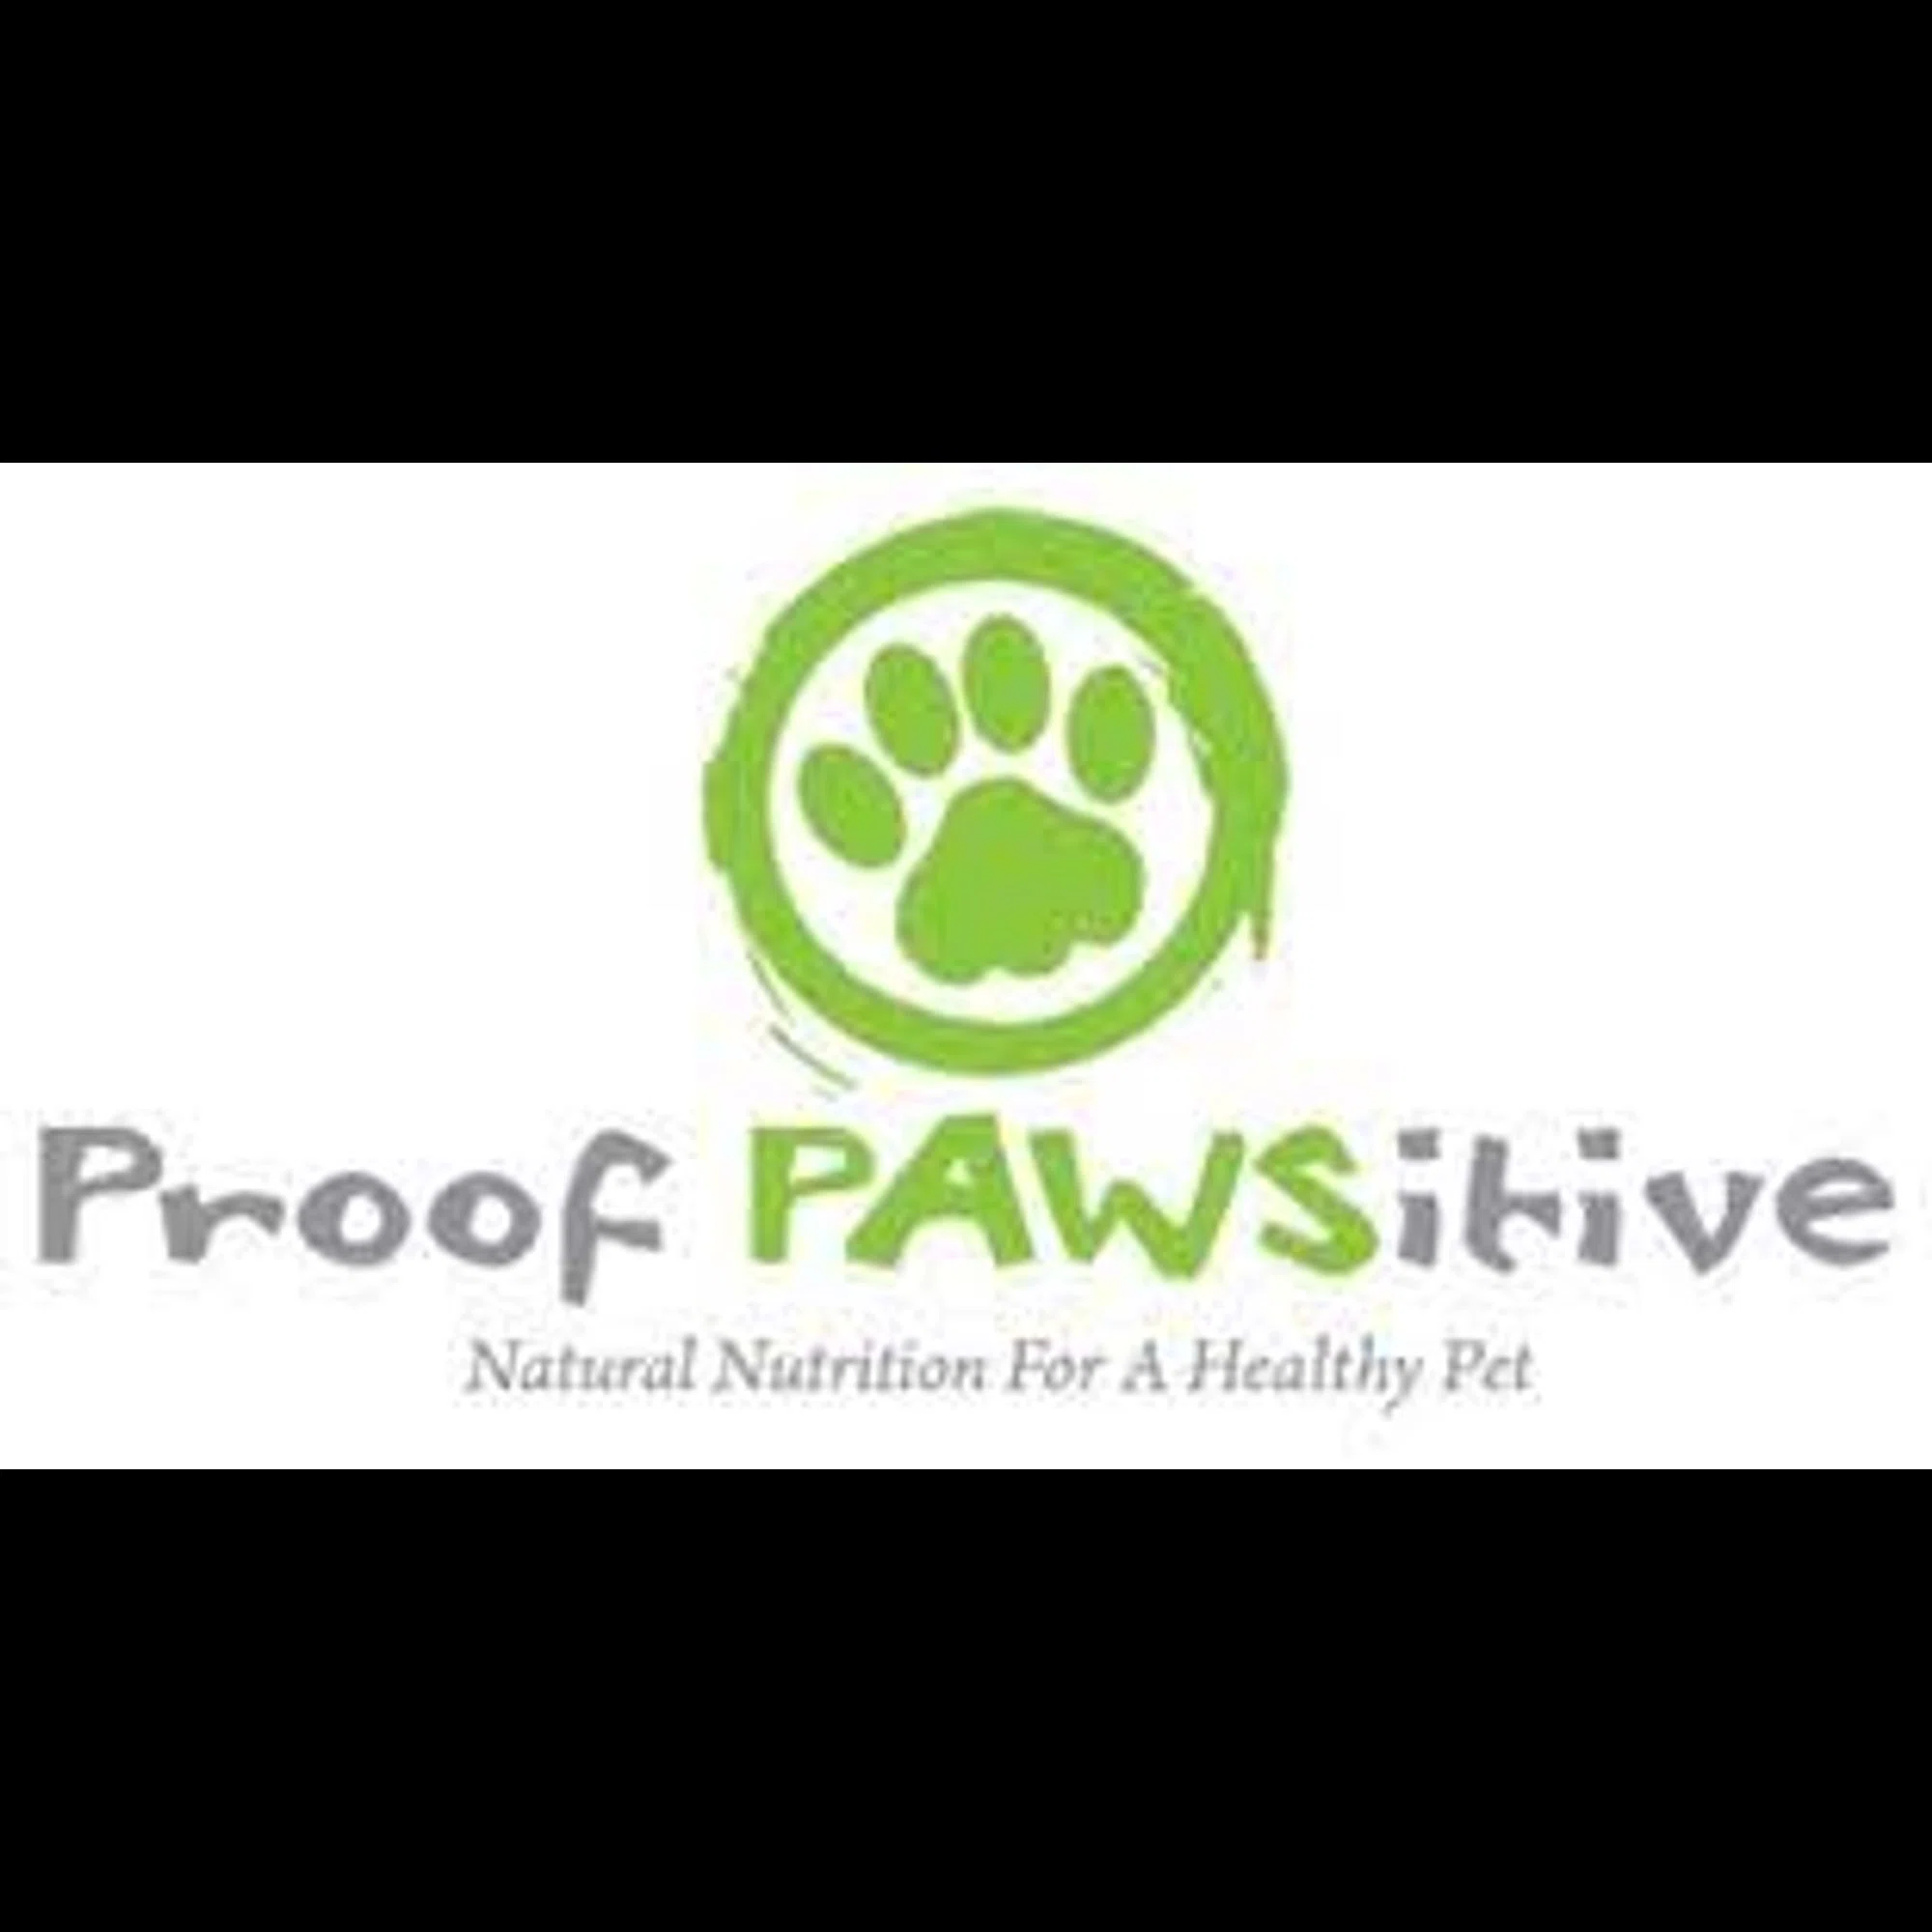 proofpawsitive.com logo